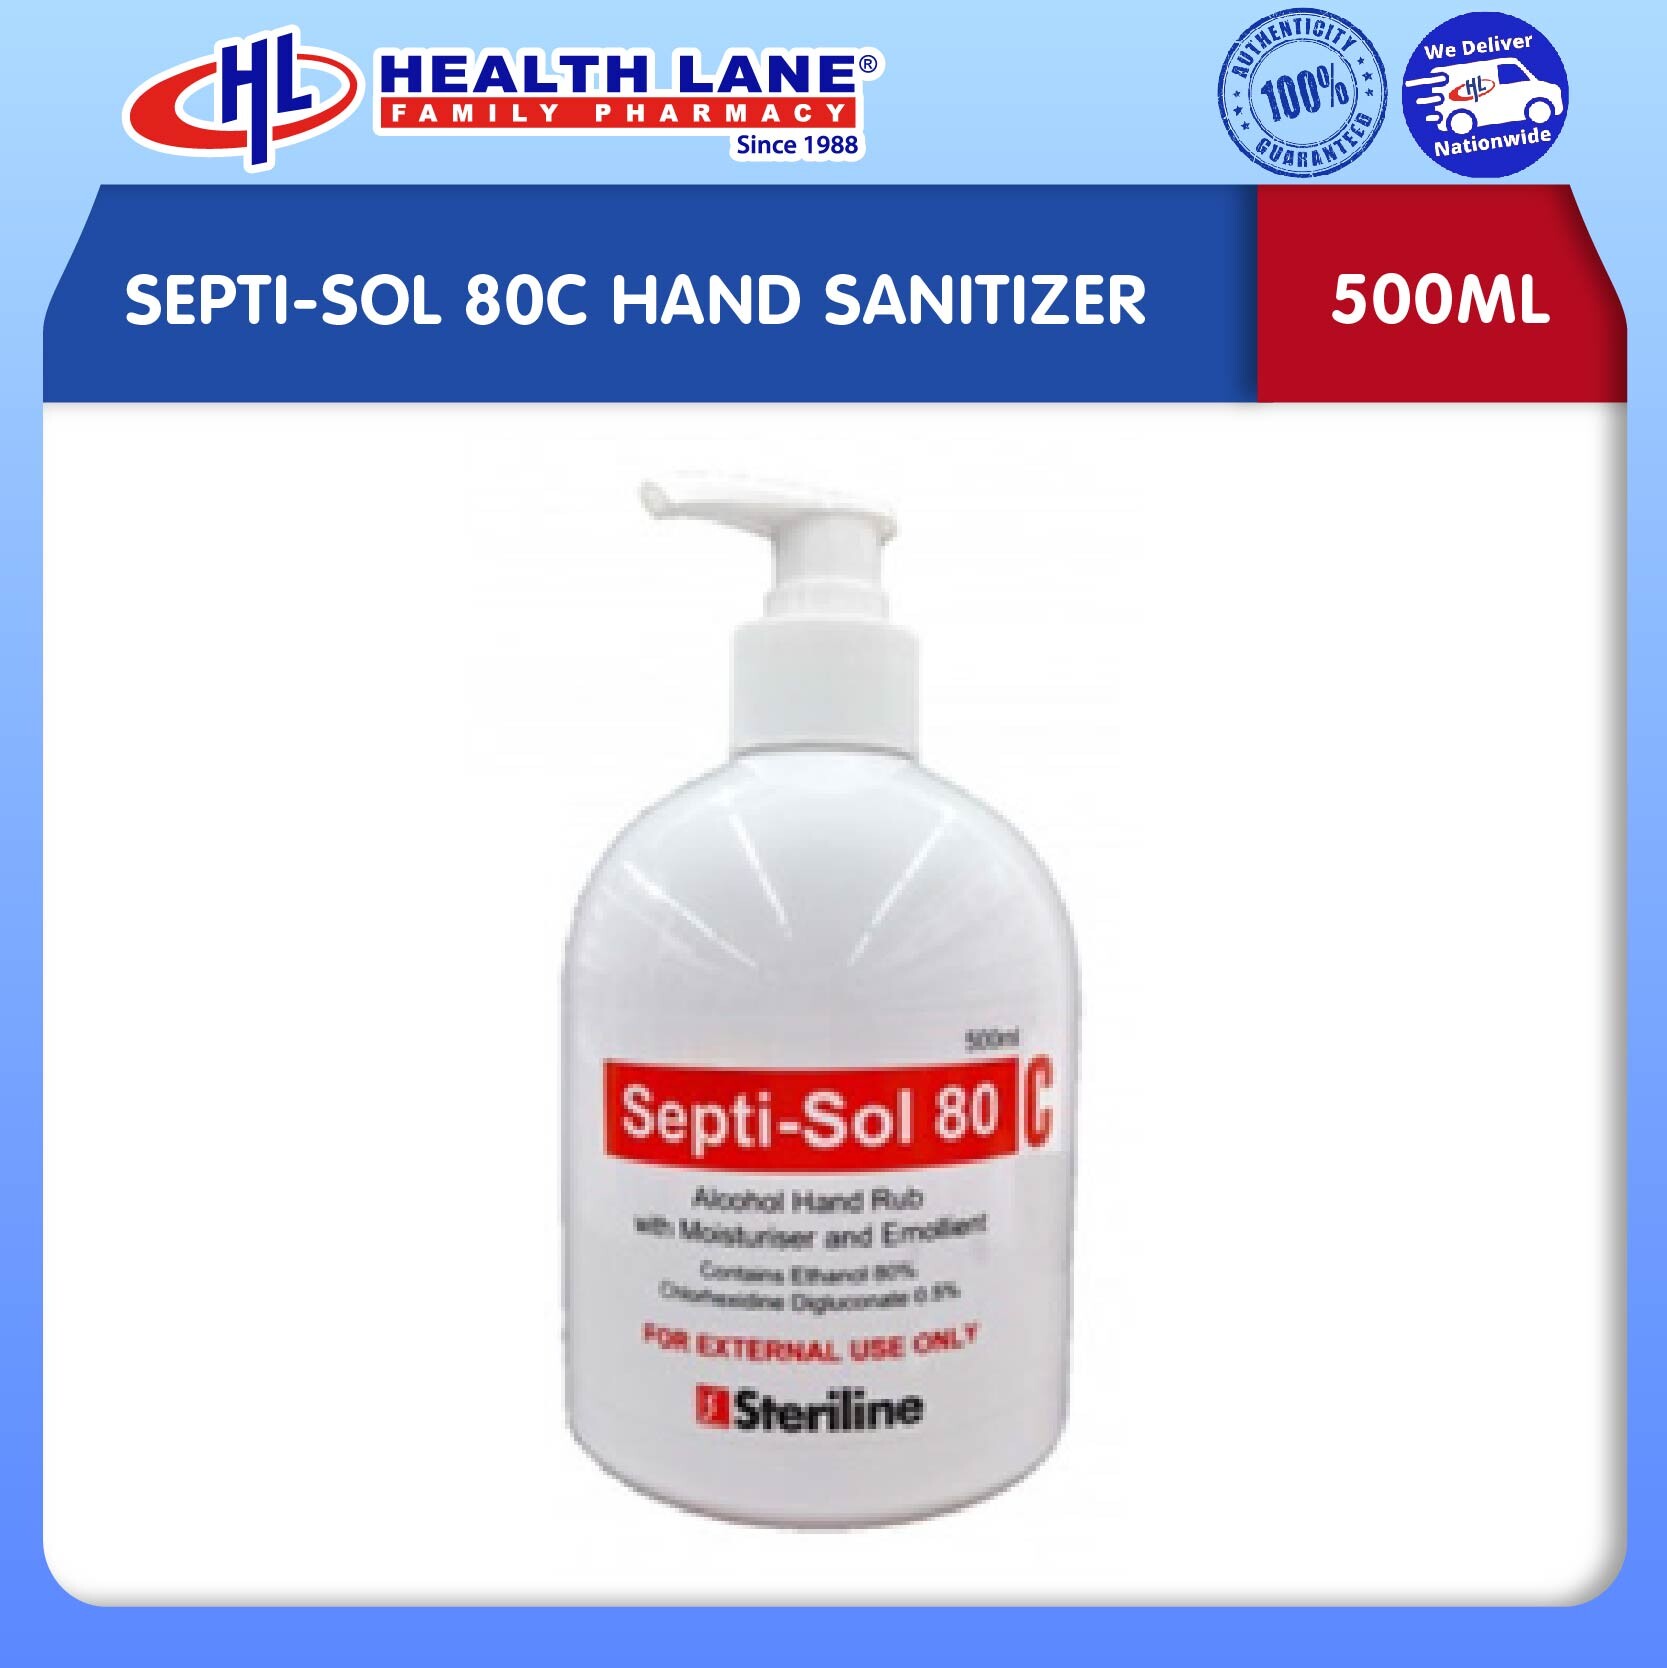 SEPTI-SOL 80C HAND SANITIZER (500ML)